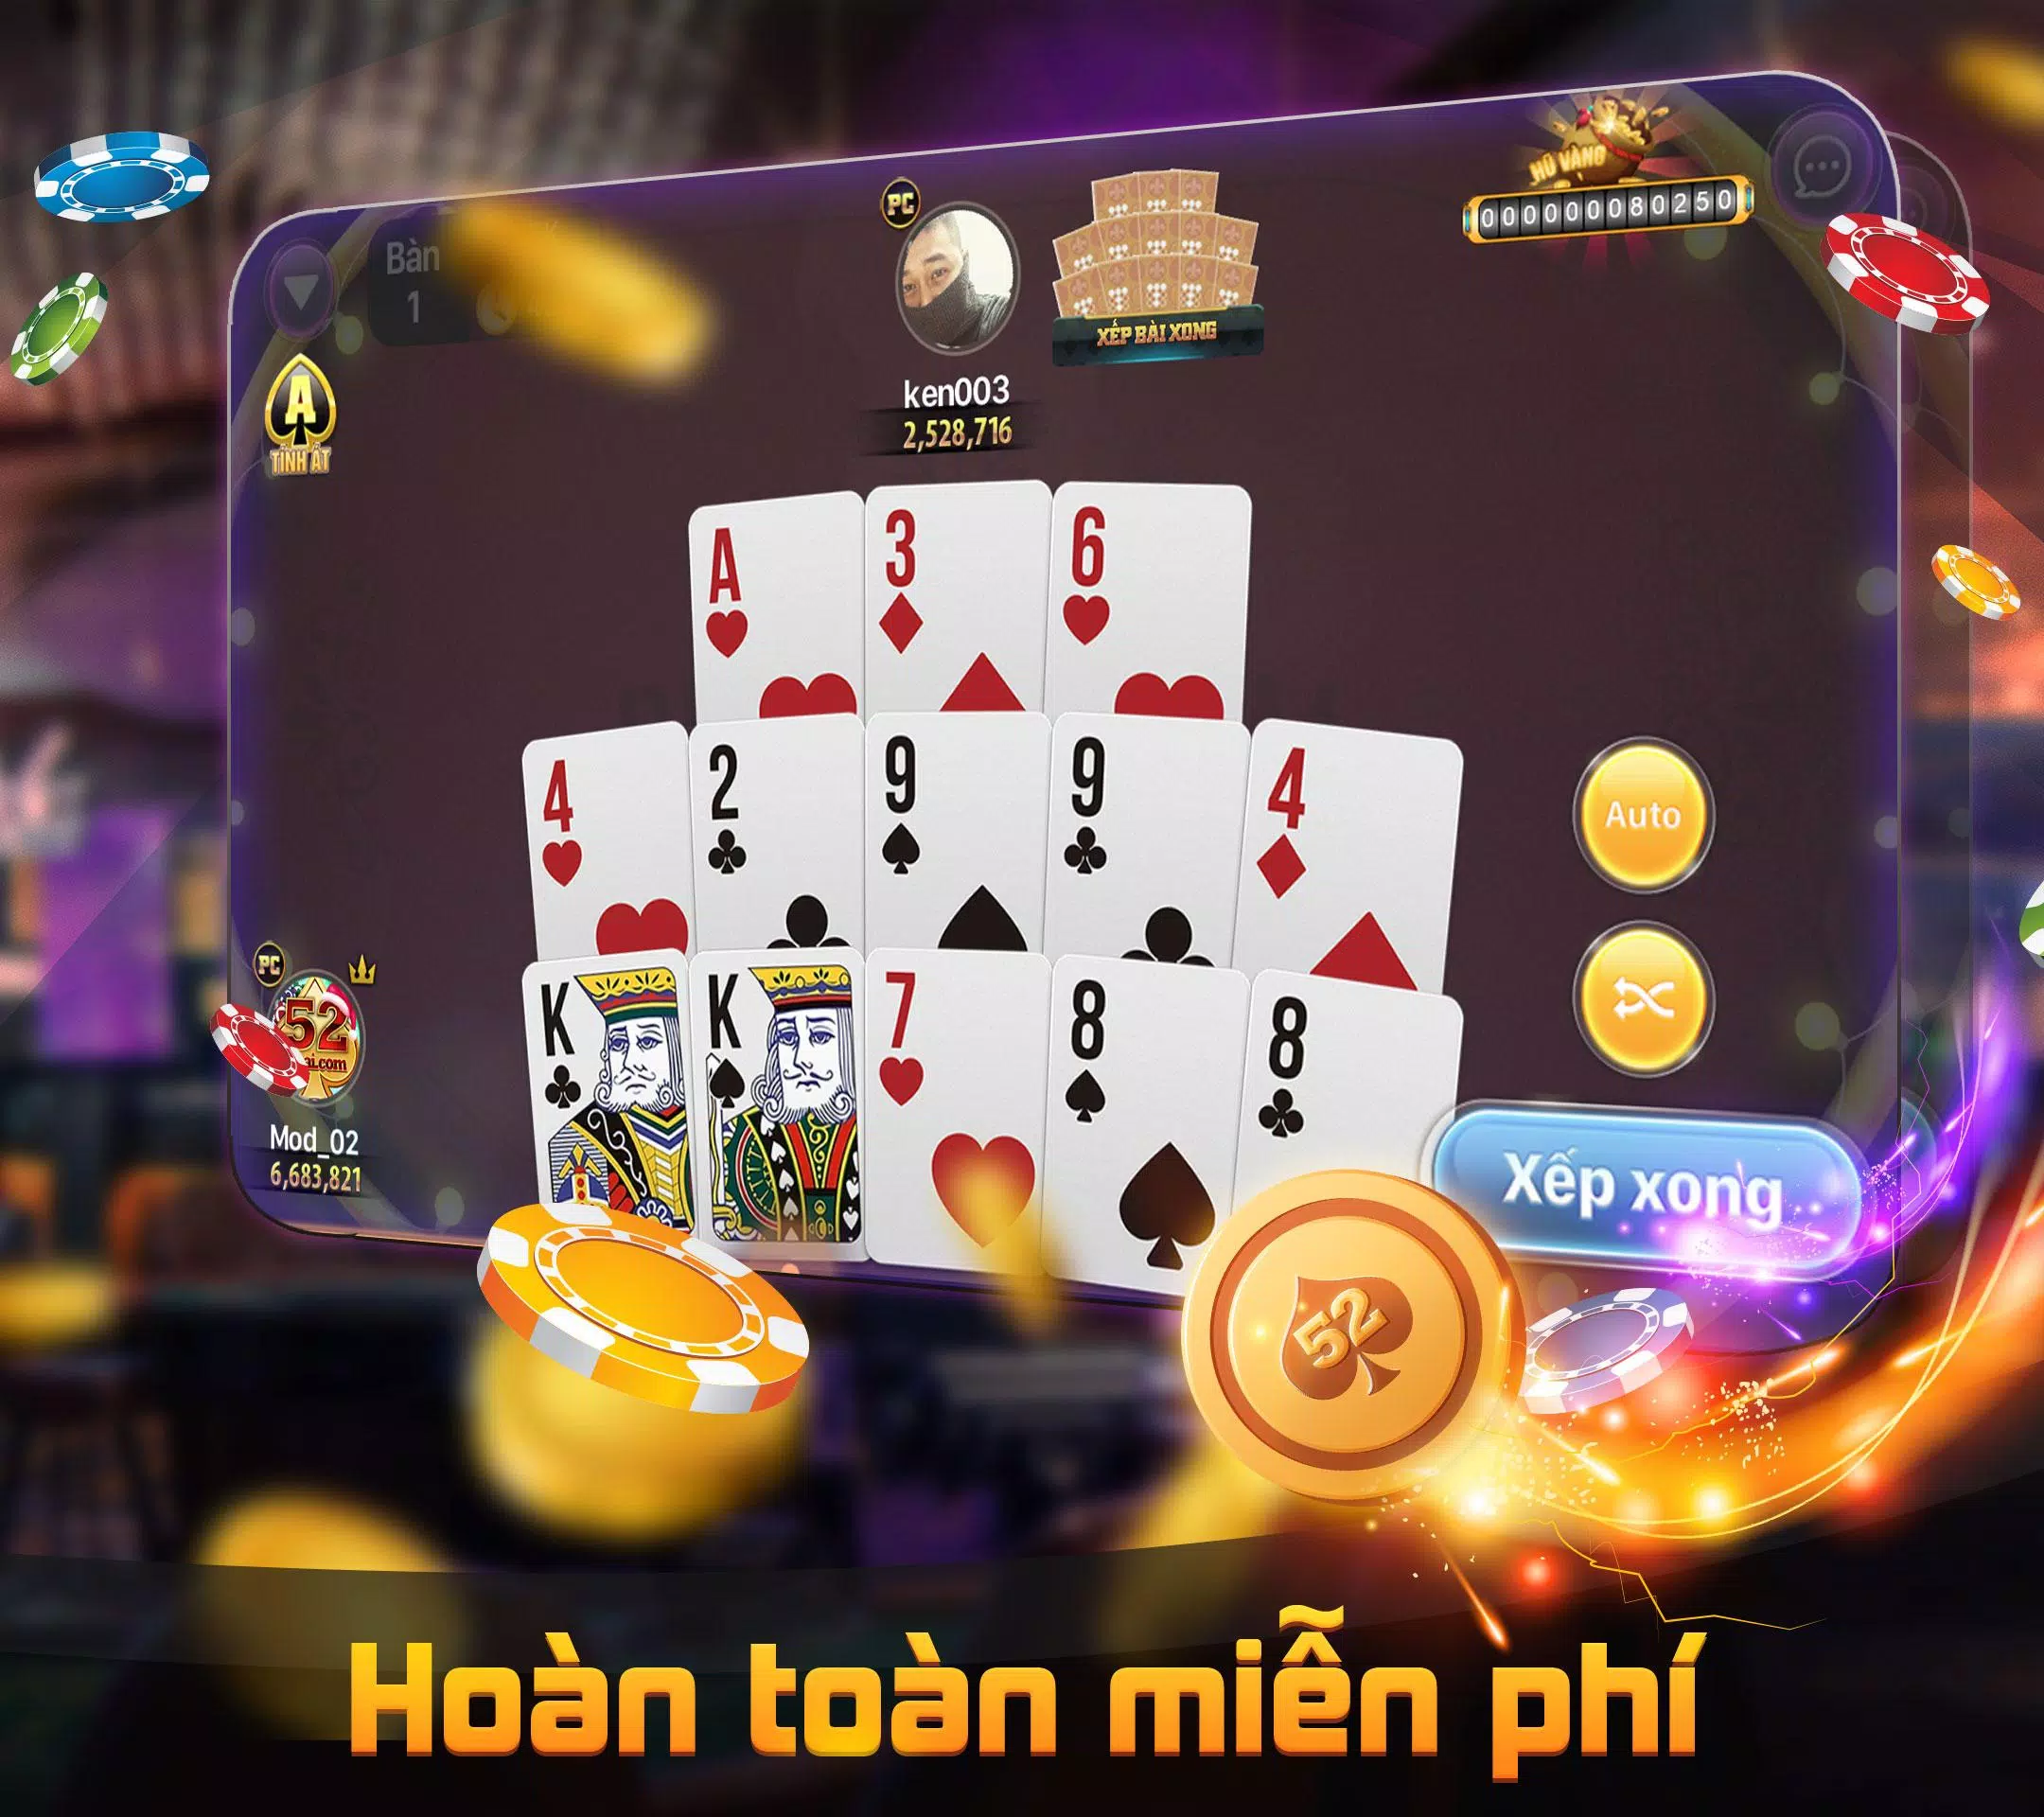 52labai.com - Game Danh bai mien phi for Android - APK Download